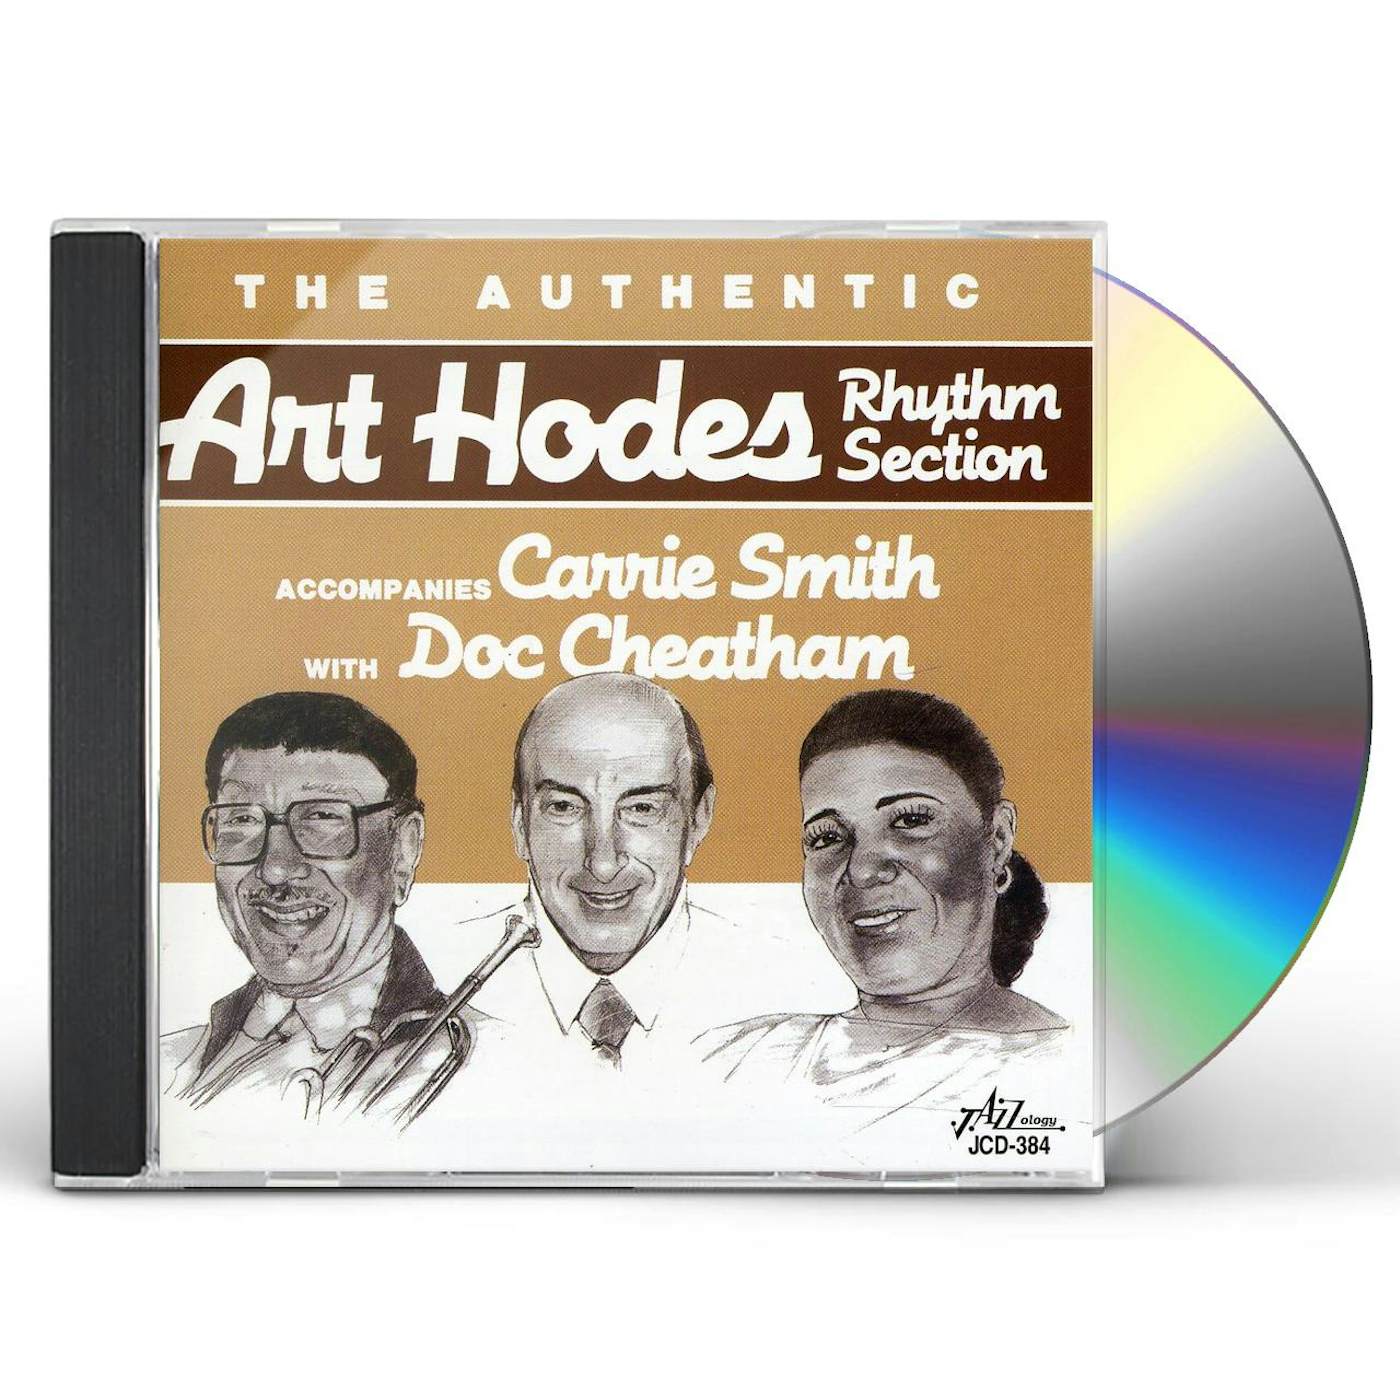 Art Hodes ACCOMPANIES CARRIE SMITH WITH DOC CHEATHAM CD